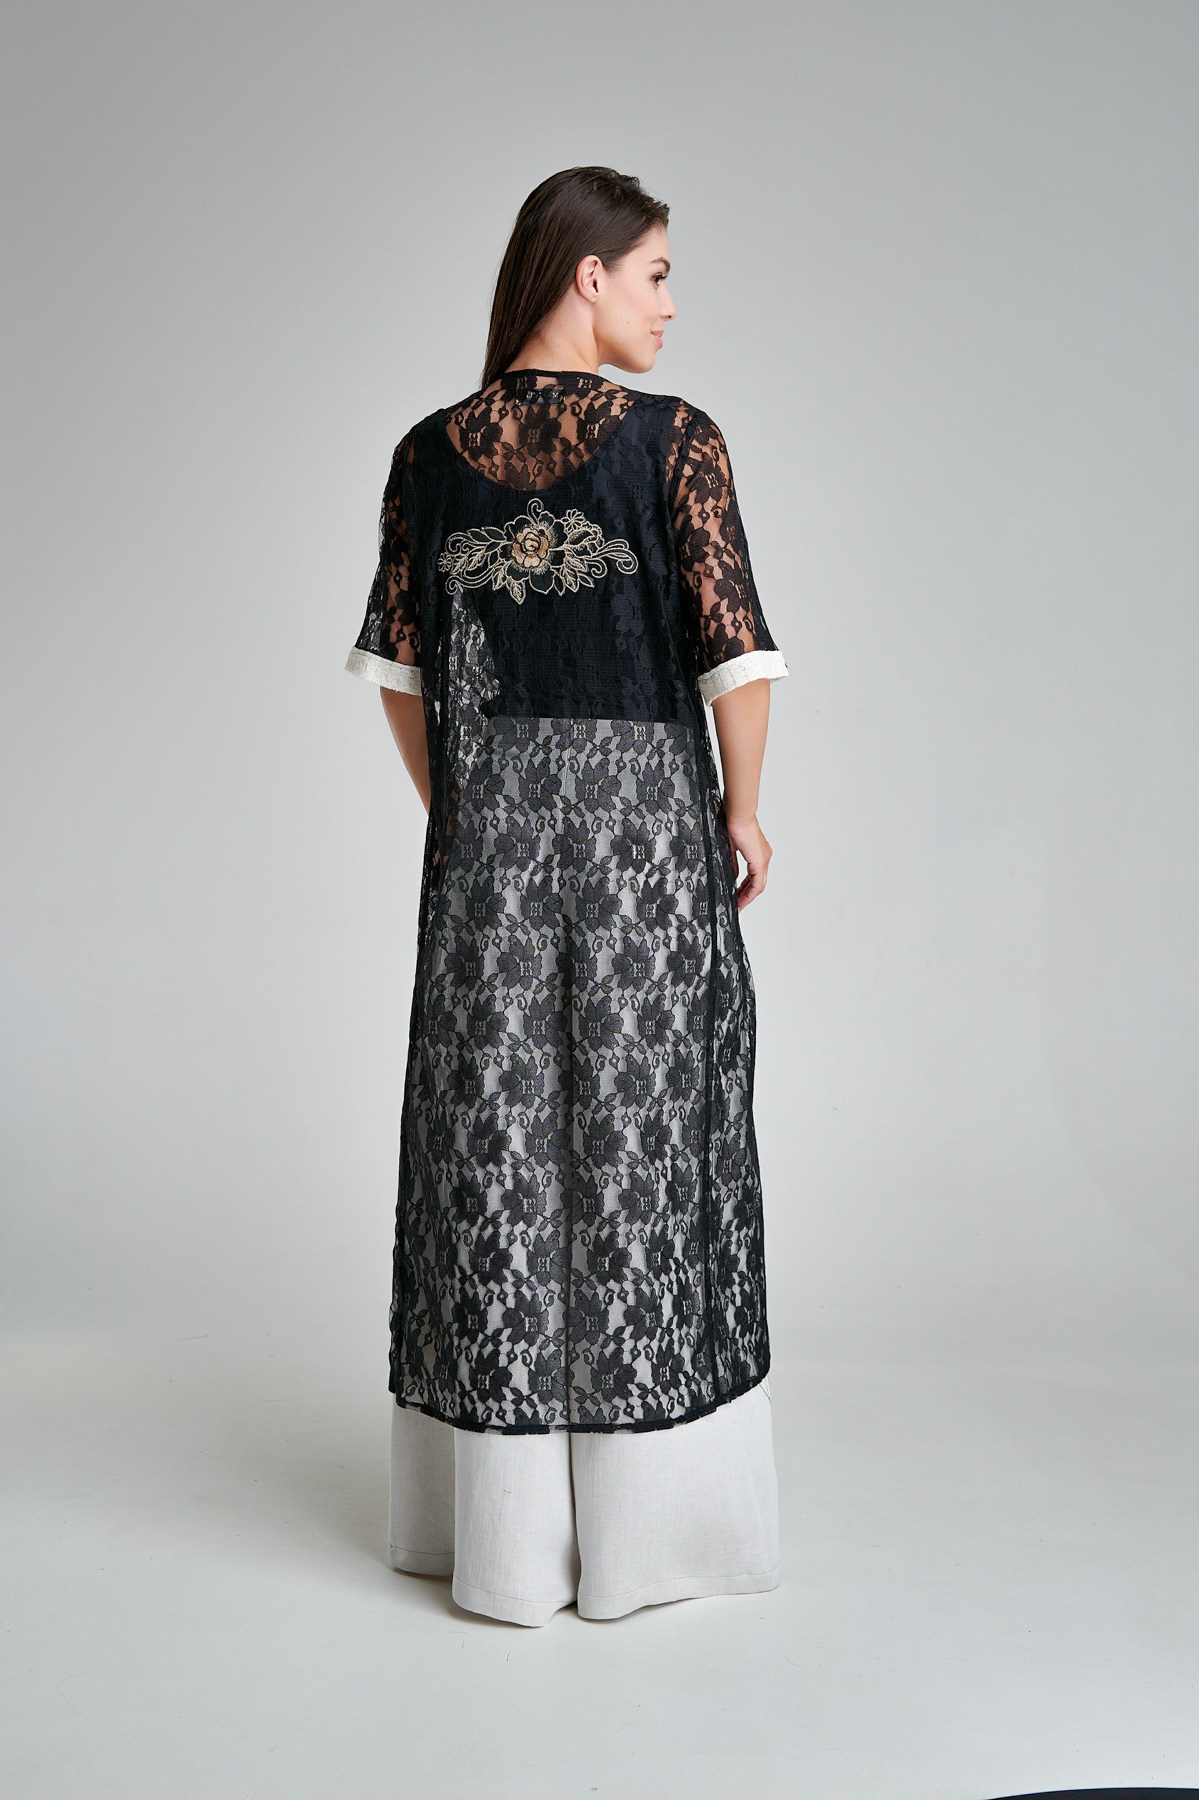 IZARA black lace cardigan. Natural fabrics, original design, handmade embroidery